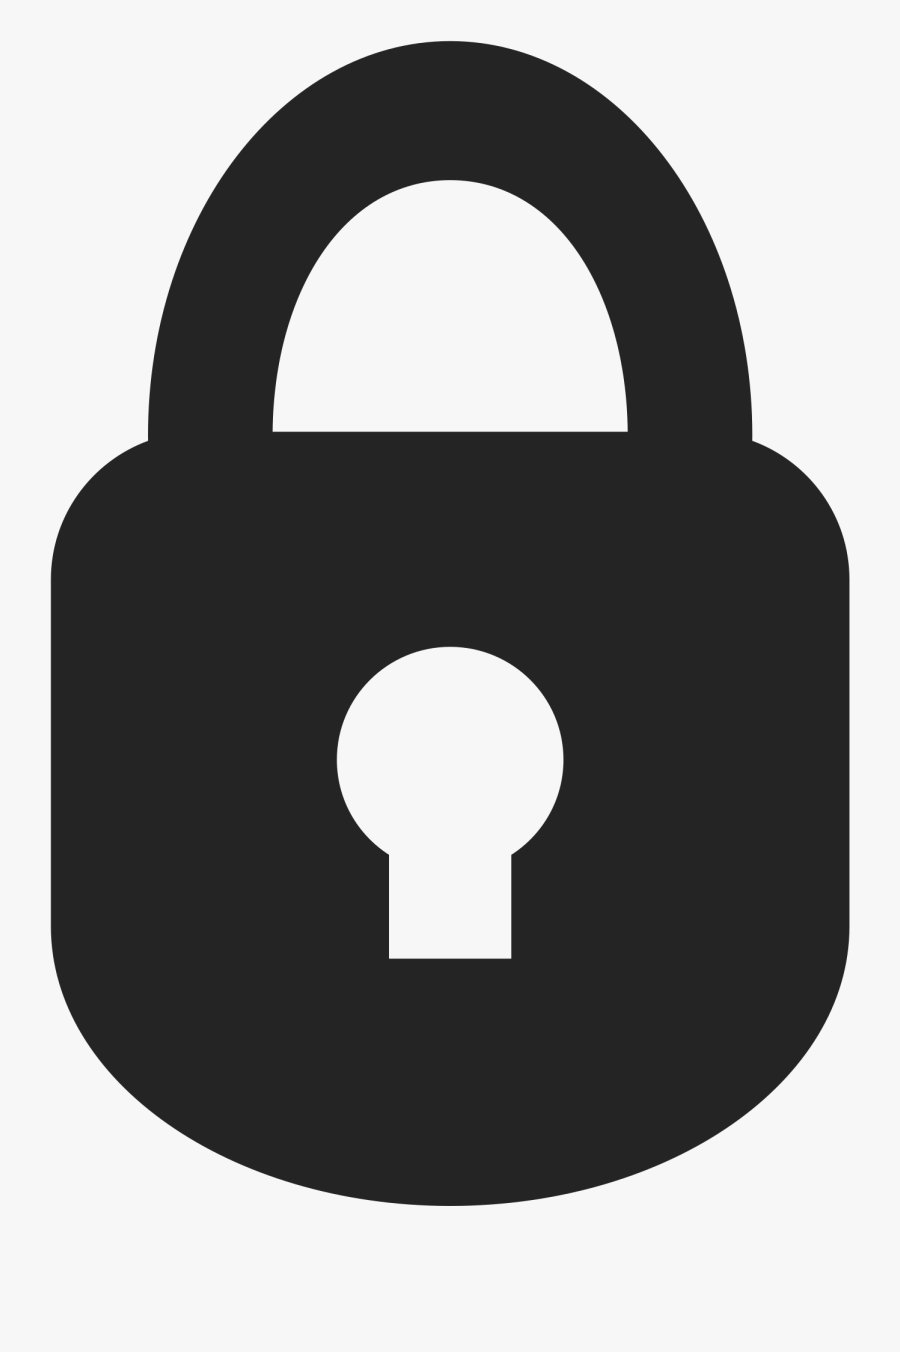 Lock Clip Art Black And White - Unlocked Lock Clipart, Transparent Clipart